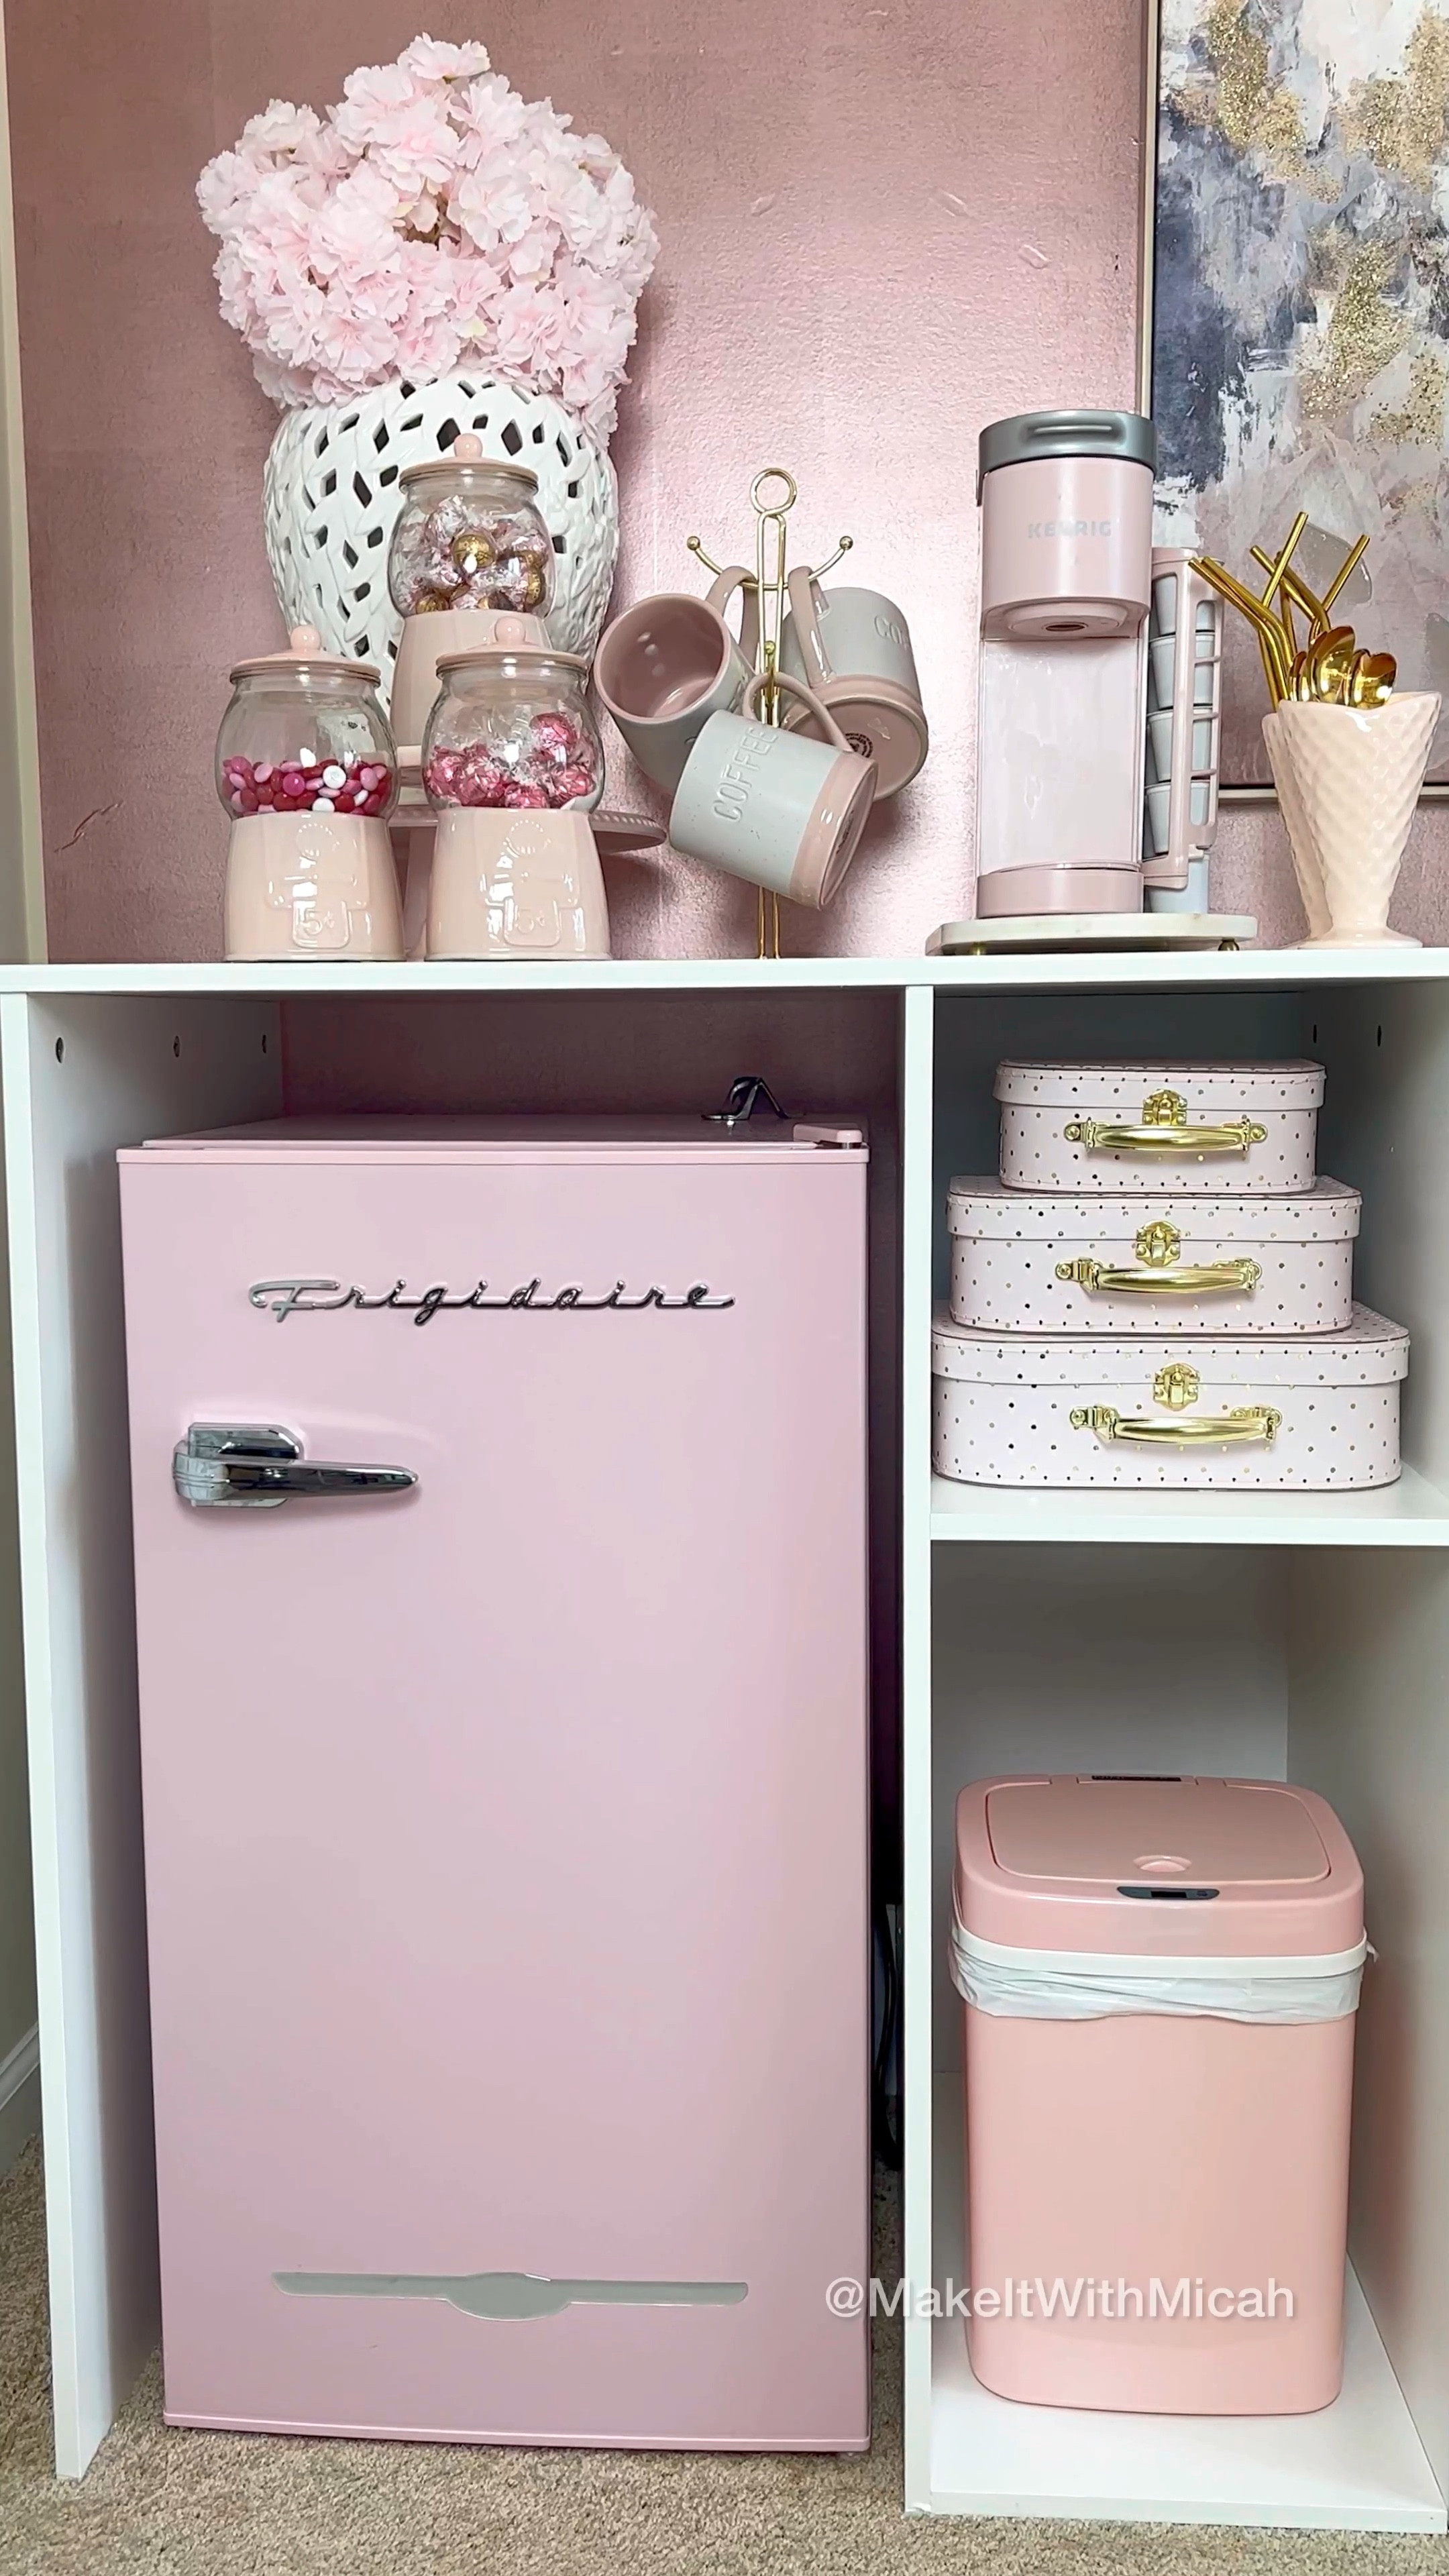 College Kitchen Supplies - Yak About It Mini Fridge Dorm Station - White -  Over Refrigerator Cabinet